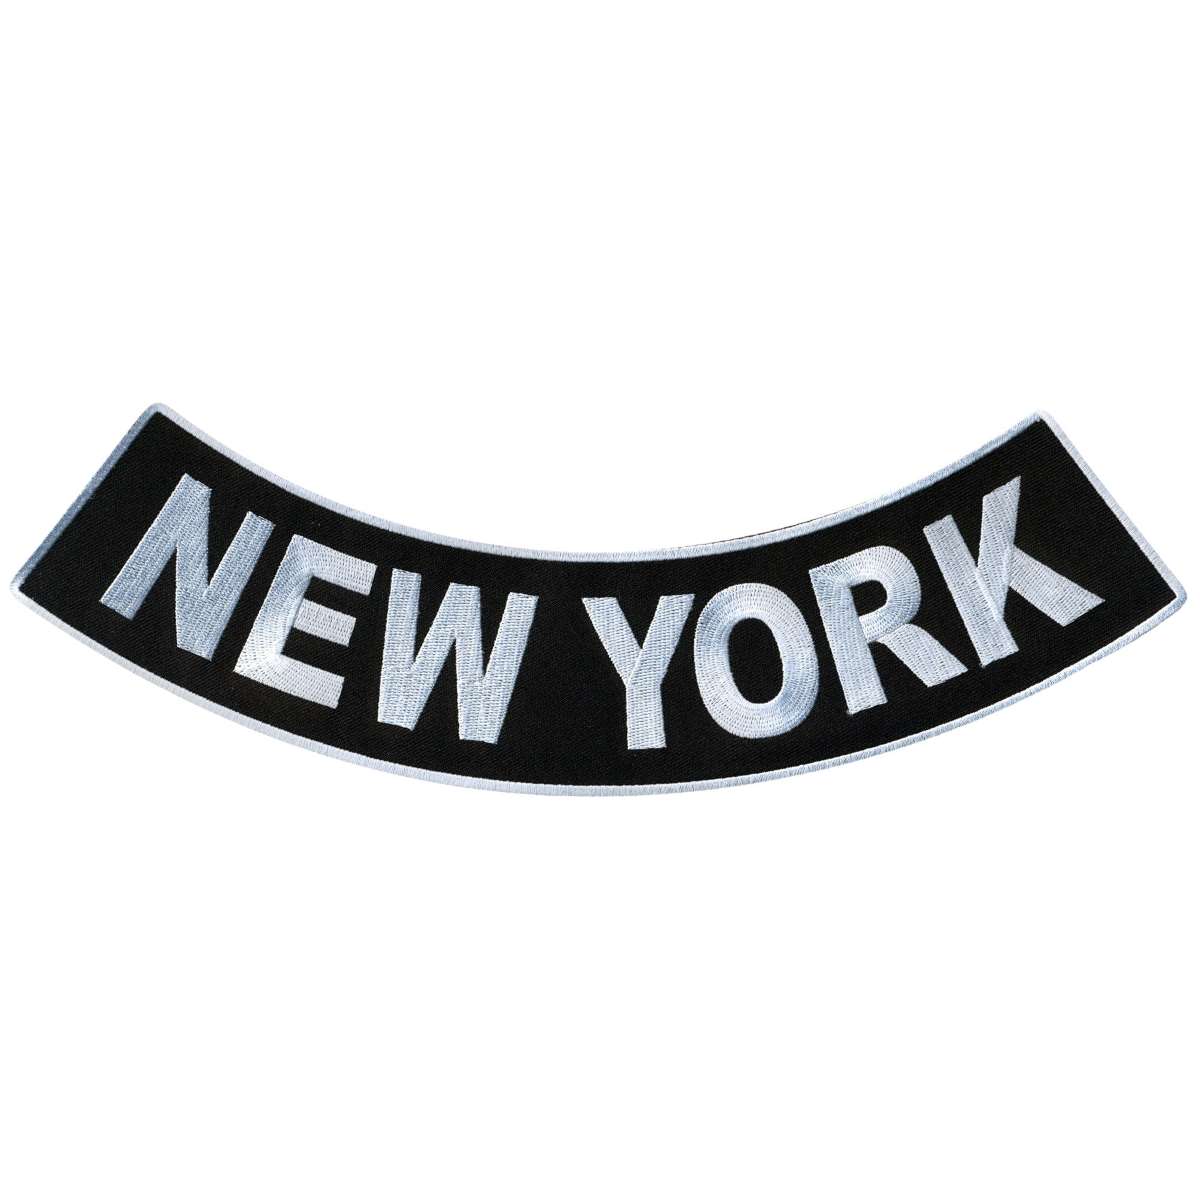 Hot Leathers New York 12” X 3” Bottom Rocker Patch PPM5063